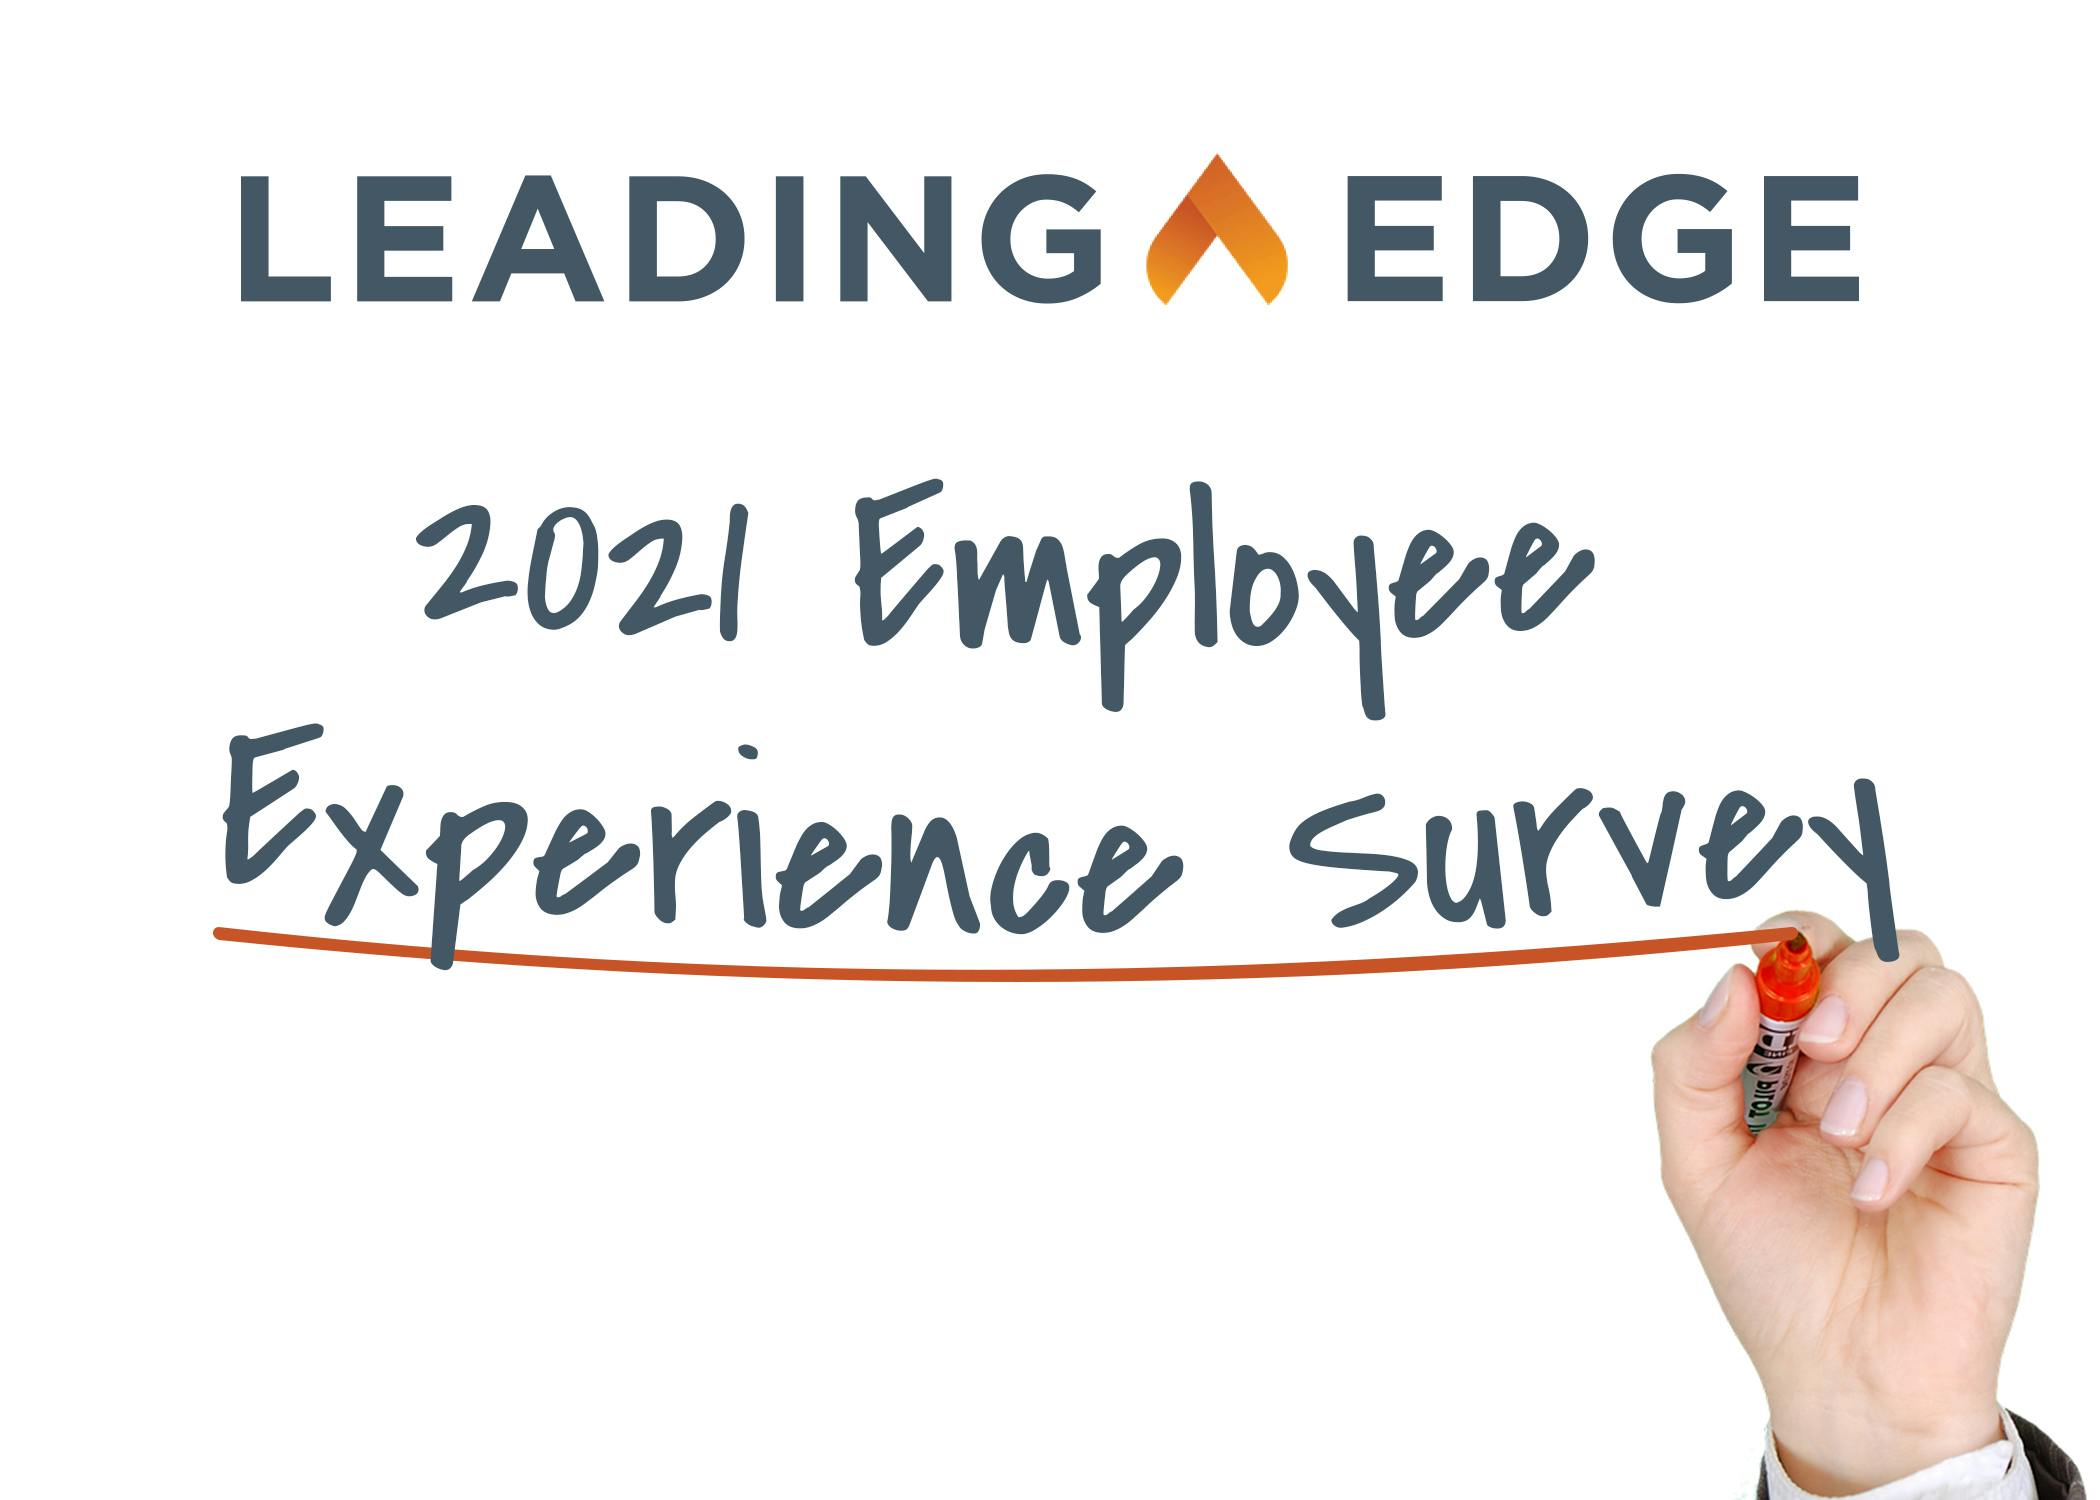 Employee Experience Survey 2021